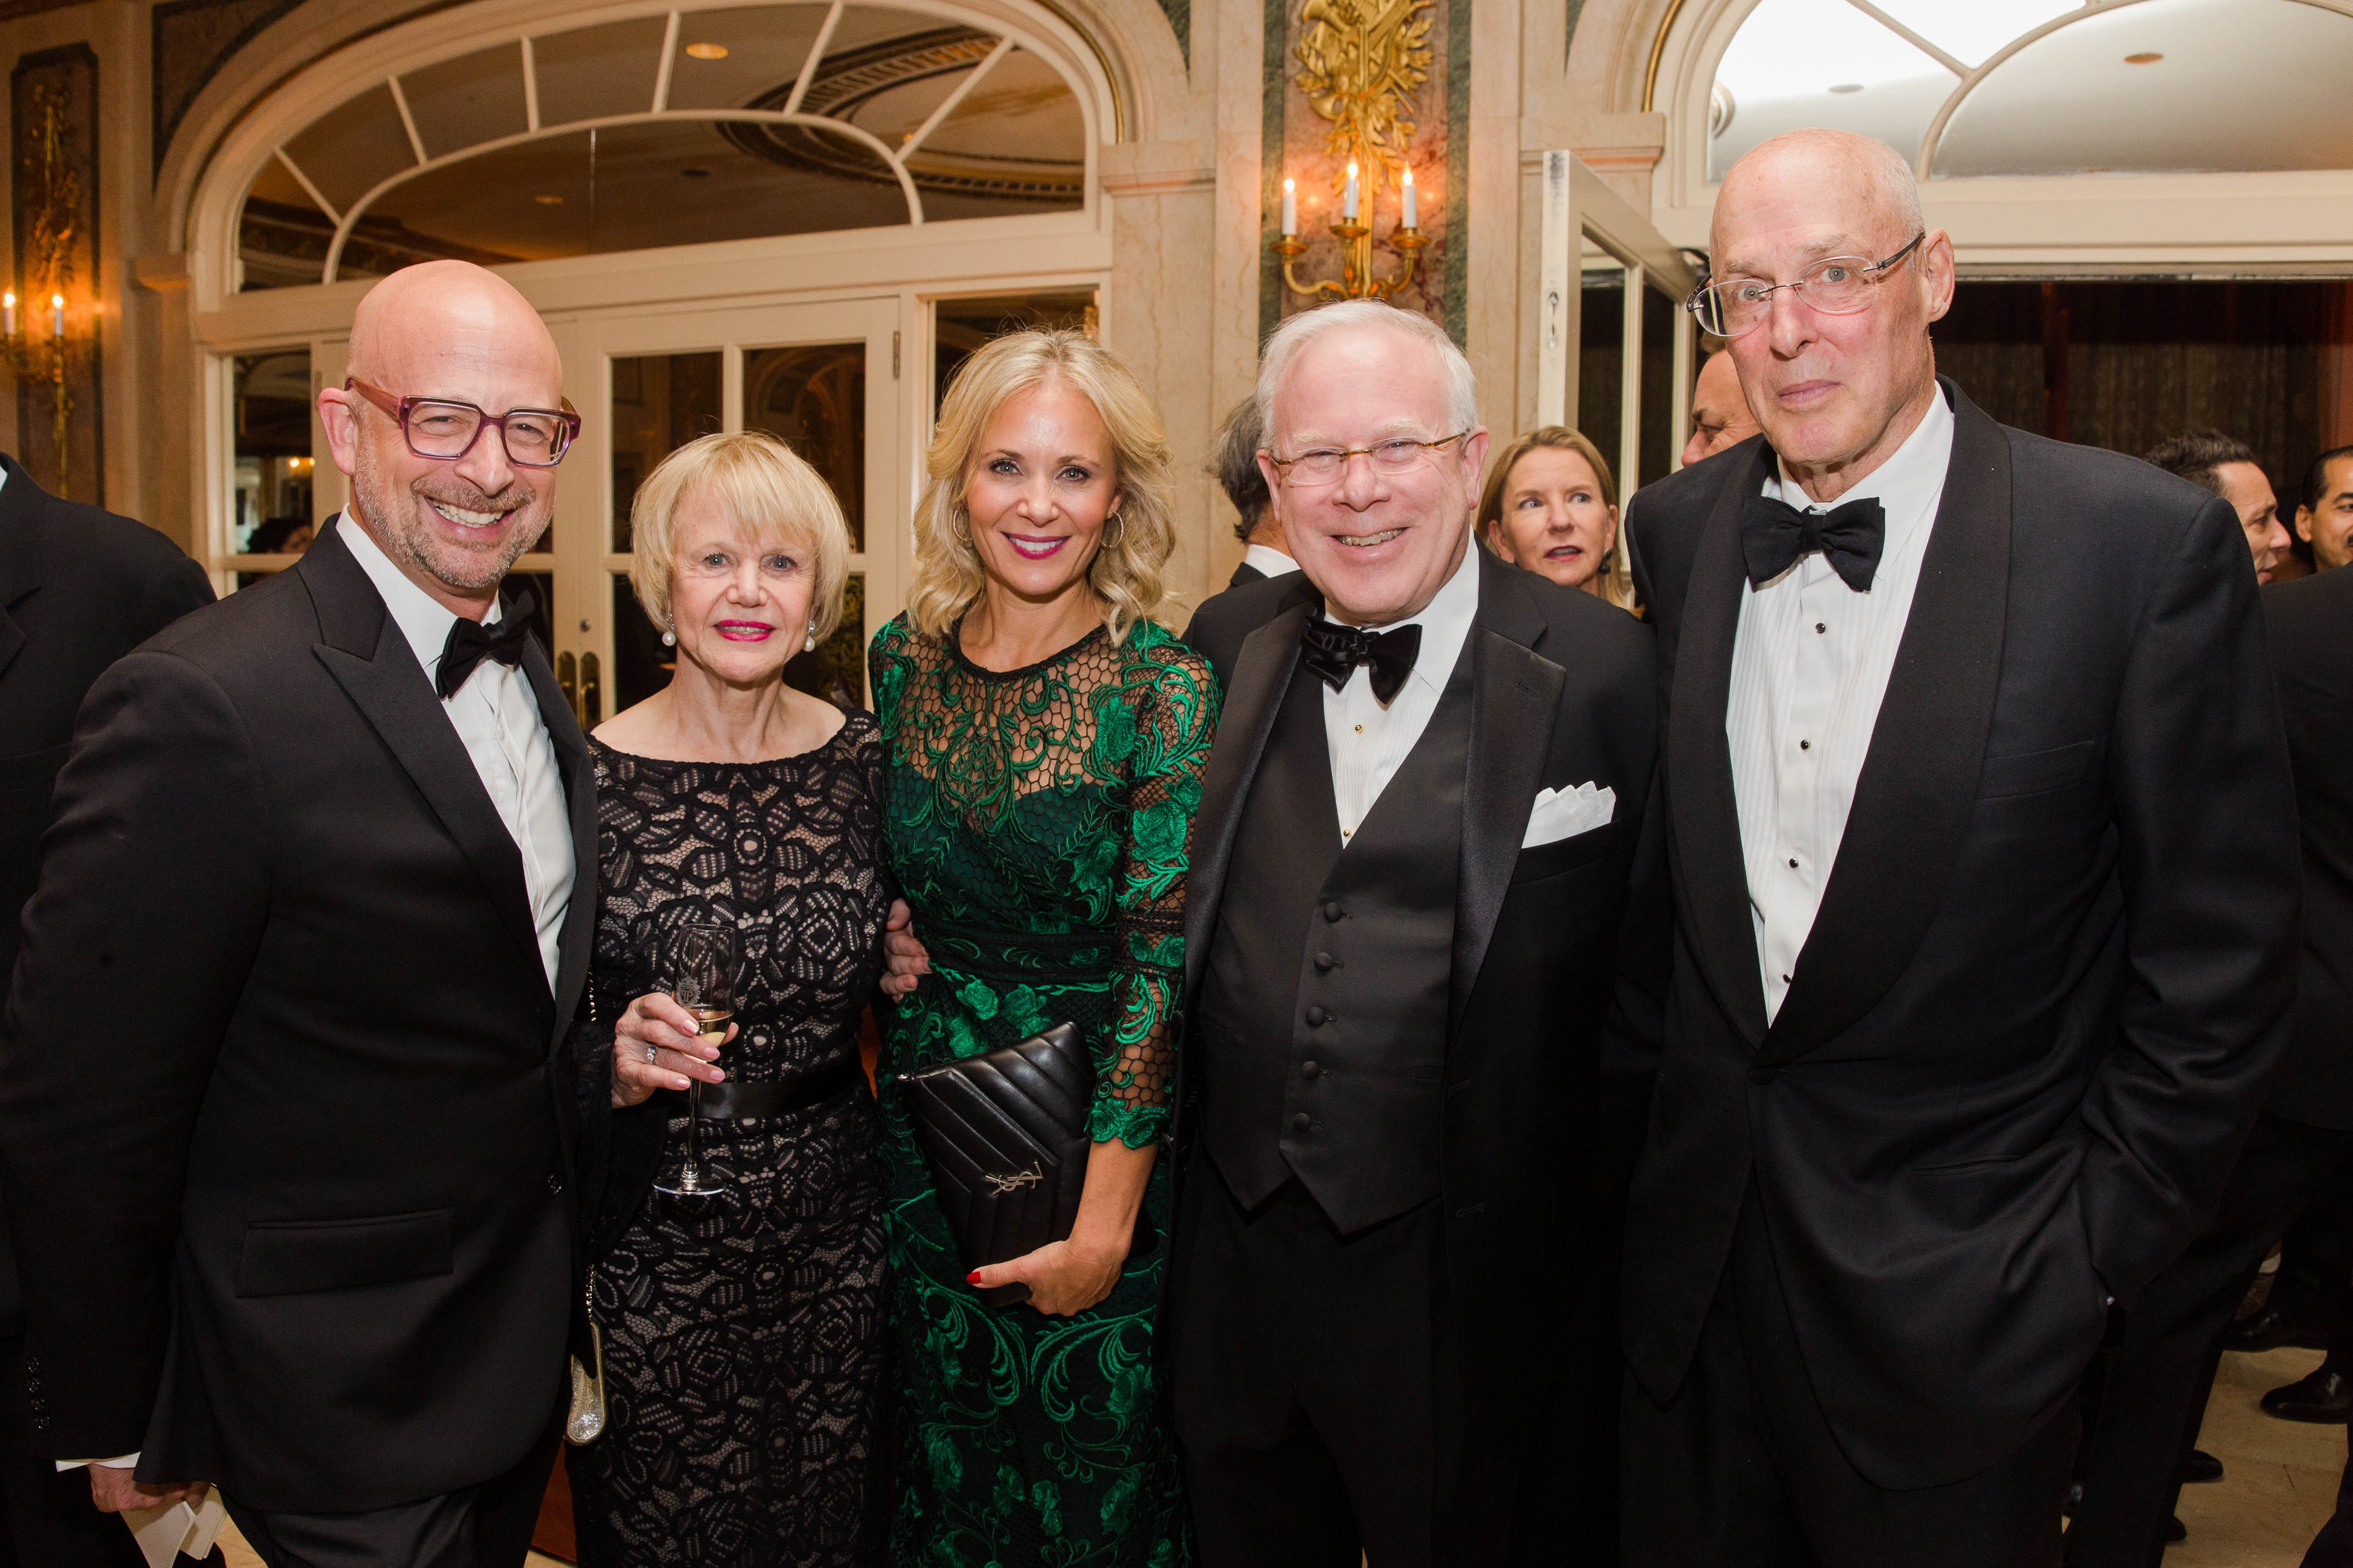 From left: Joshua David, Doreen Lehr, Deborah Lehr, The Honorable John F.W. Rogers, and Hank Paulson (photo: Liz Ligon)